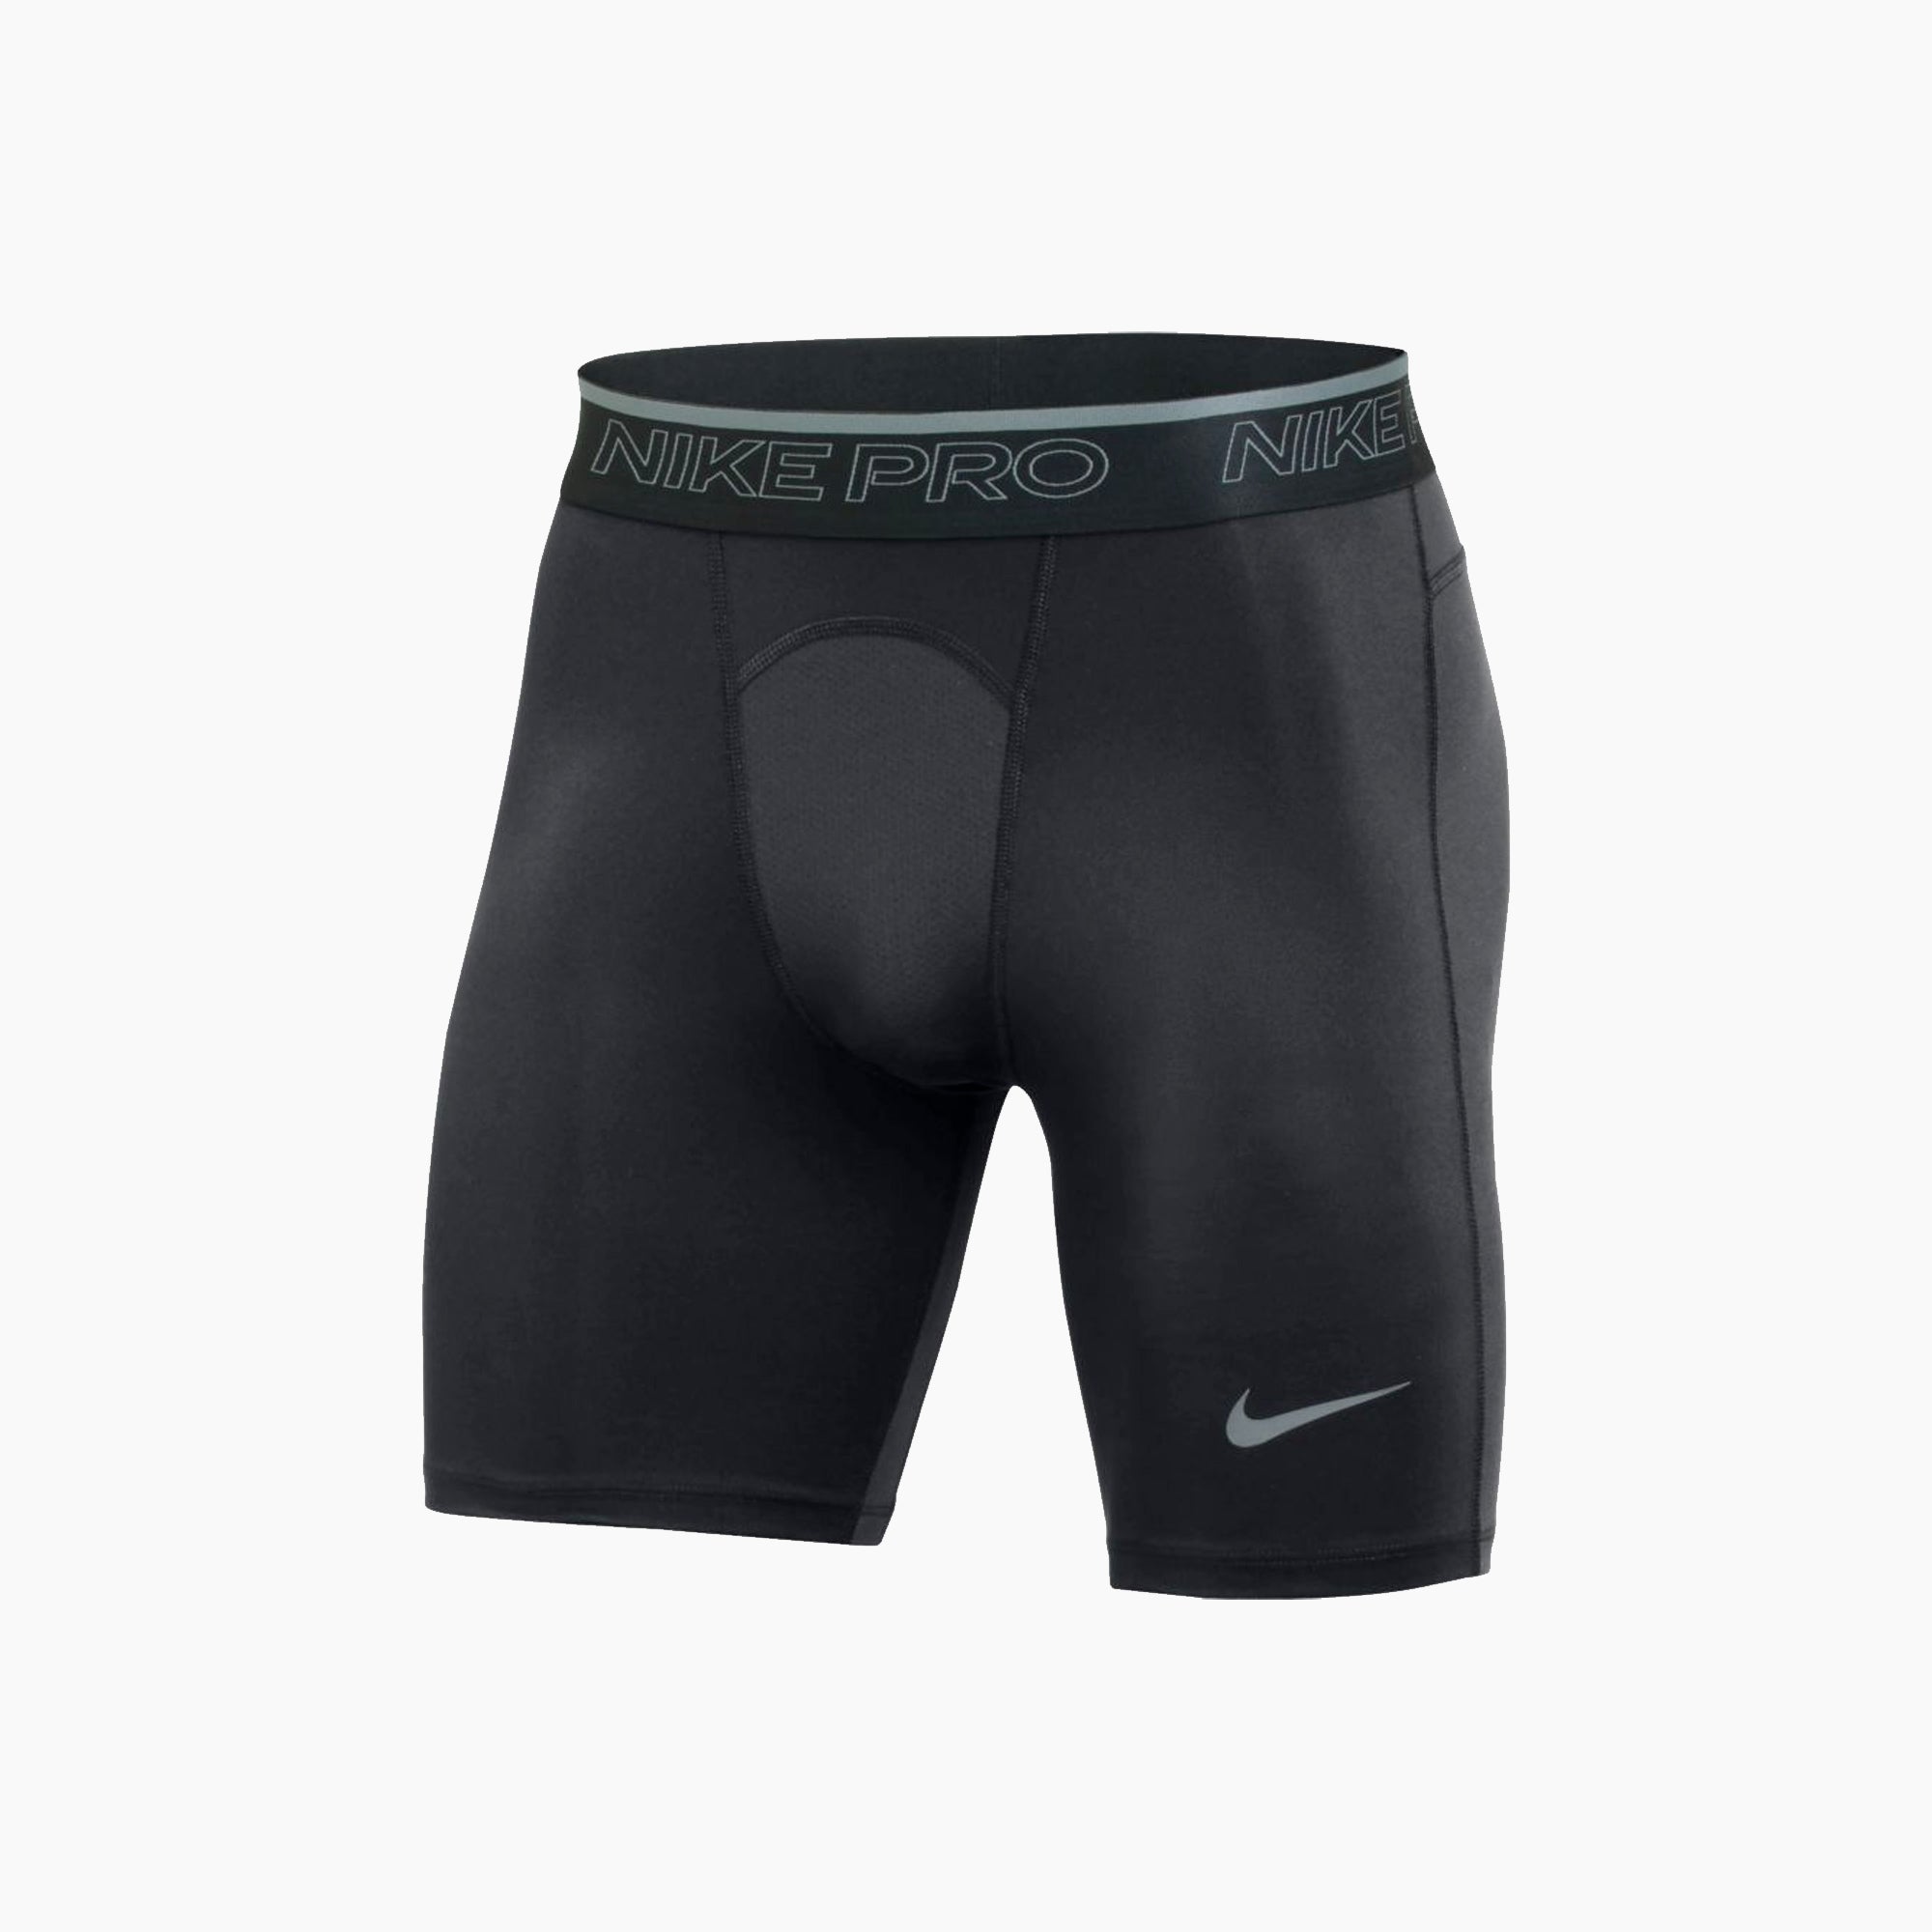 Nike Pro Men's Compression Shorts Black